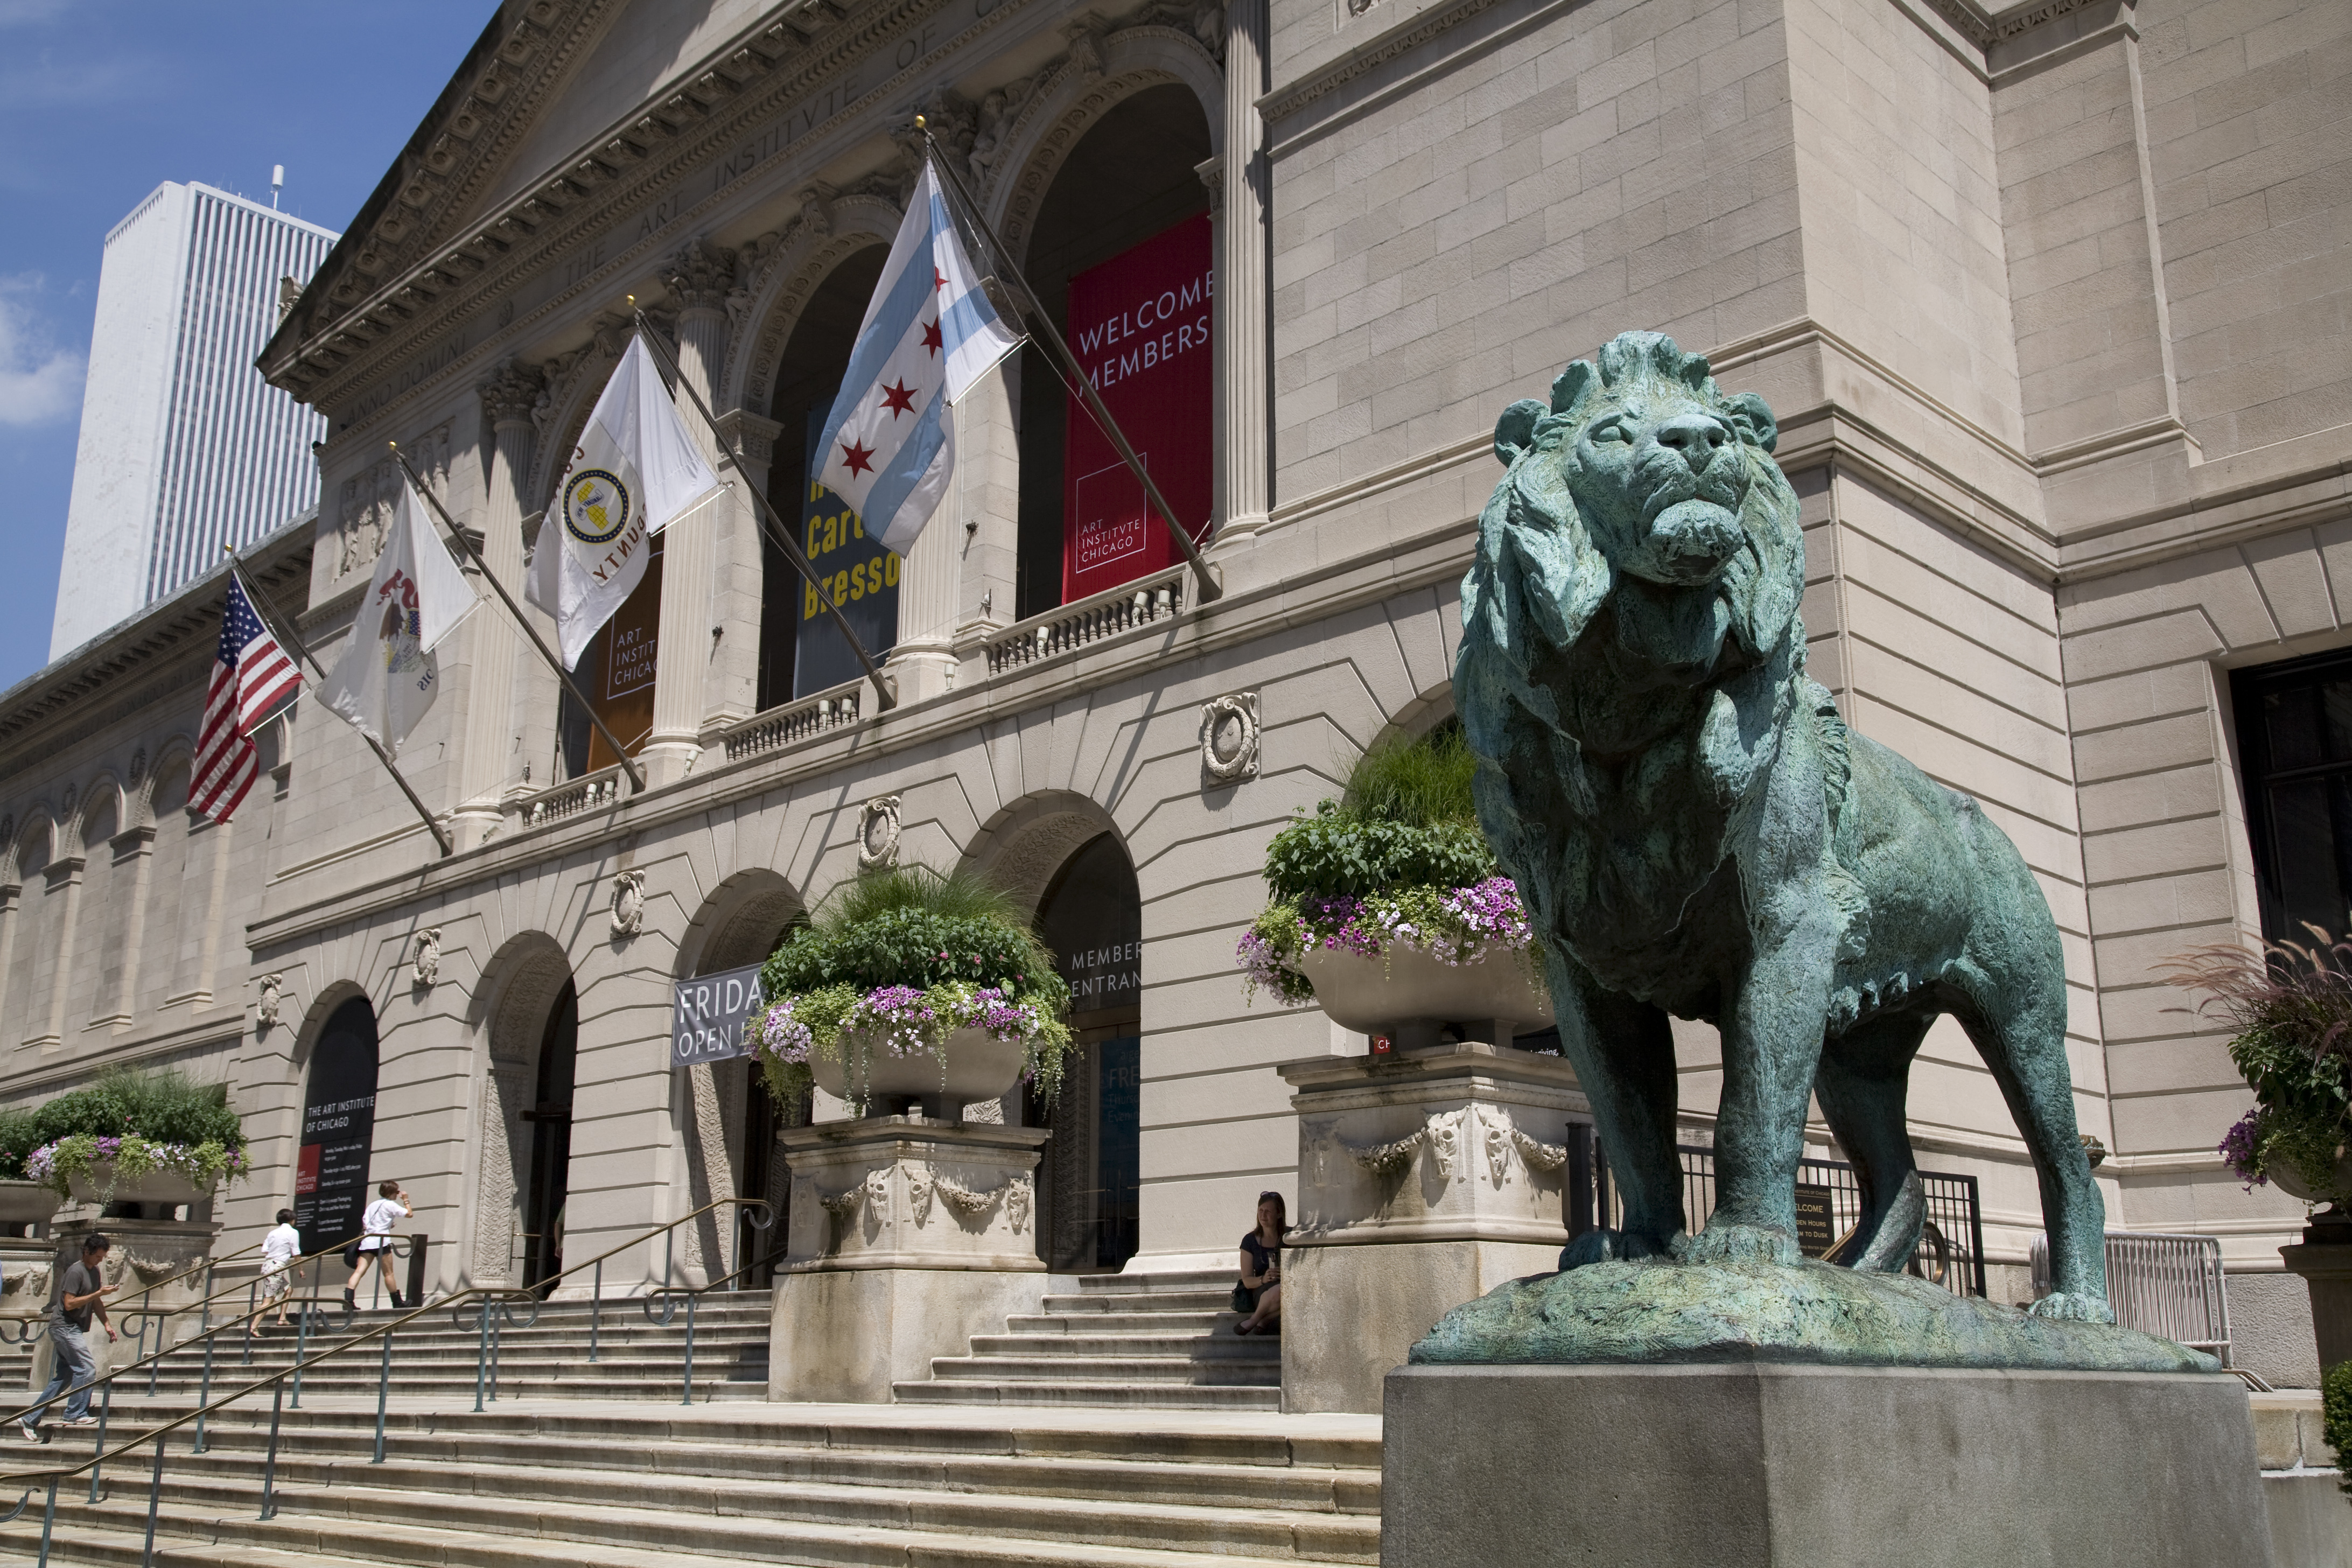 TripAdvisor Best Museums in World: Chicago Art Institute, Getty Center